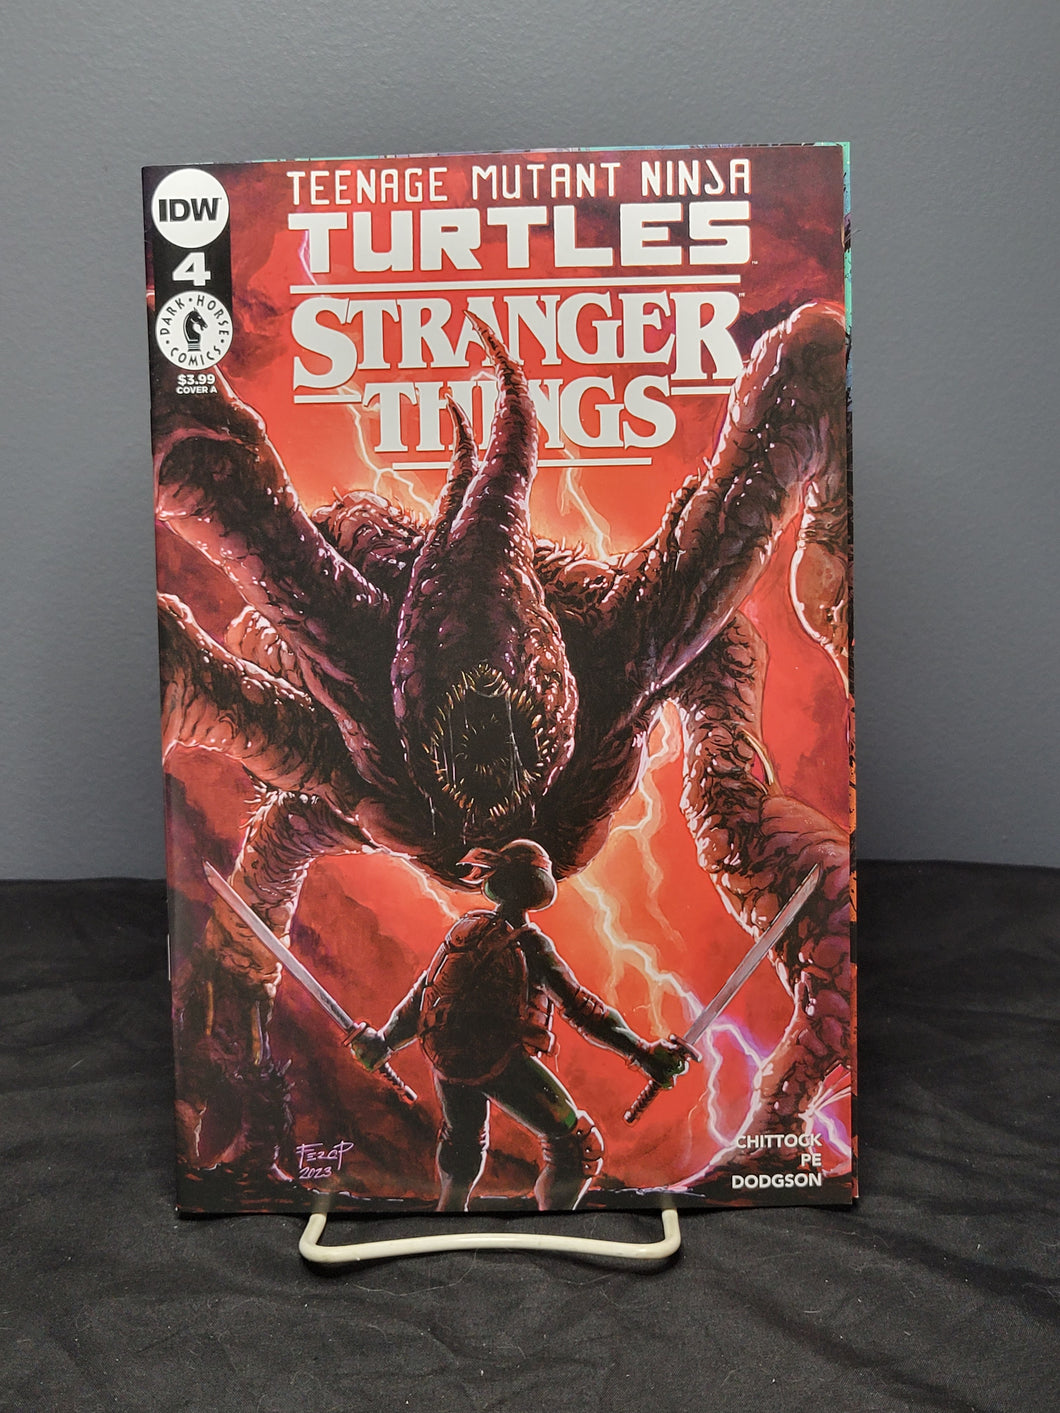 Teenage Mutant Ninja Turtles Stranger Things #4